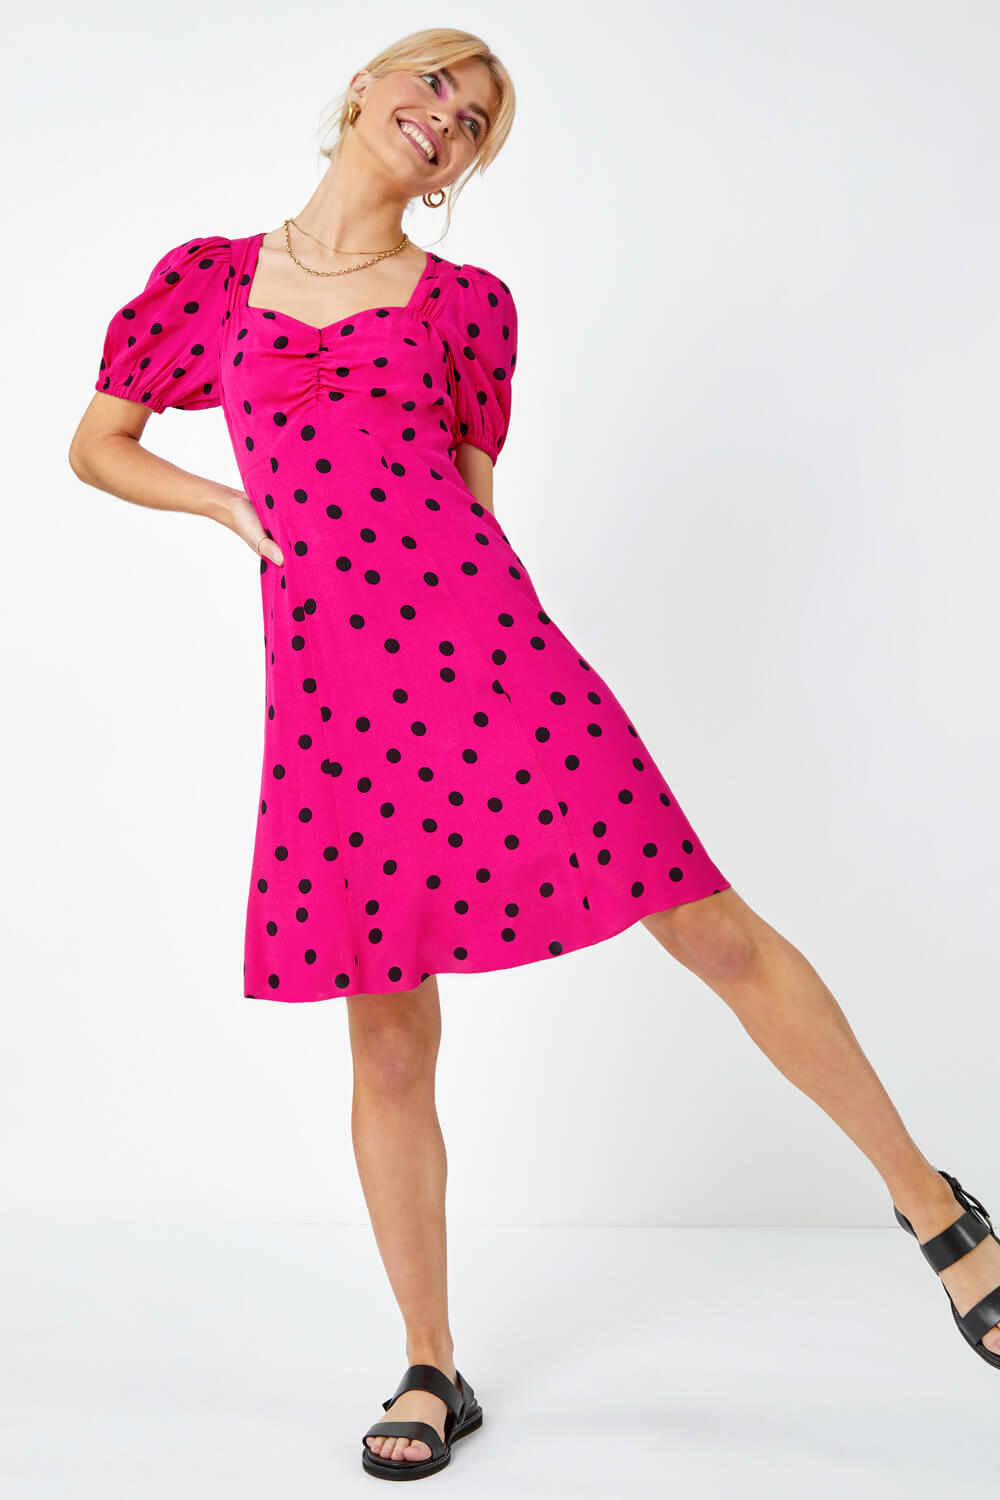 PINK Sweetheart Neck Polka Dot Dress, Image 4 of 5